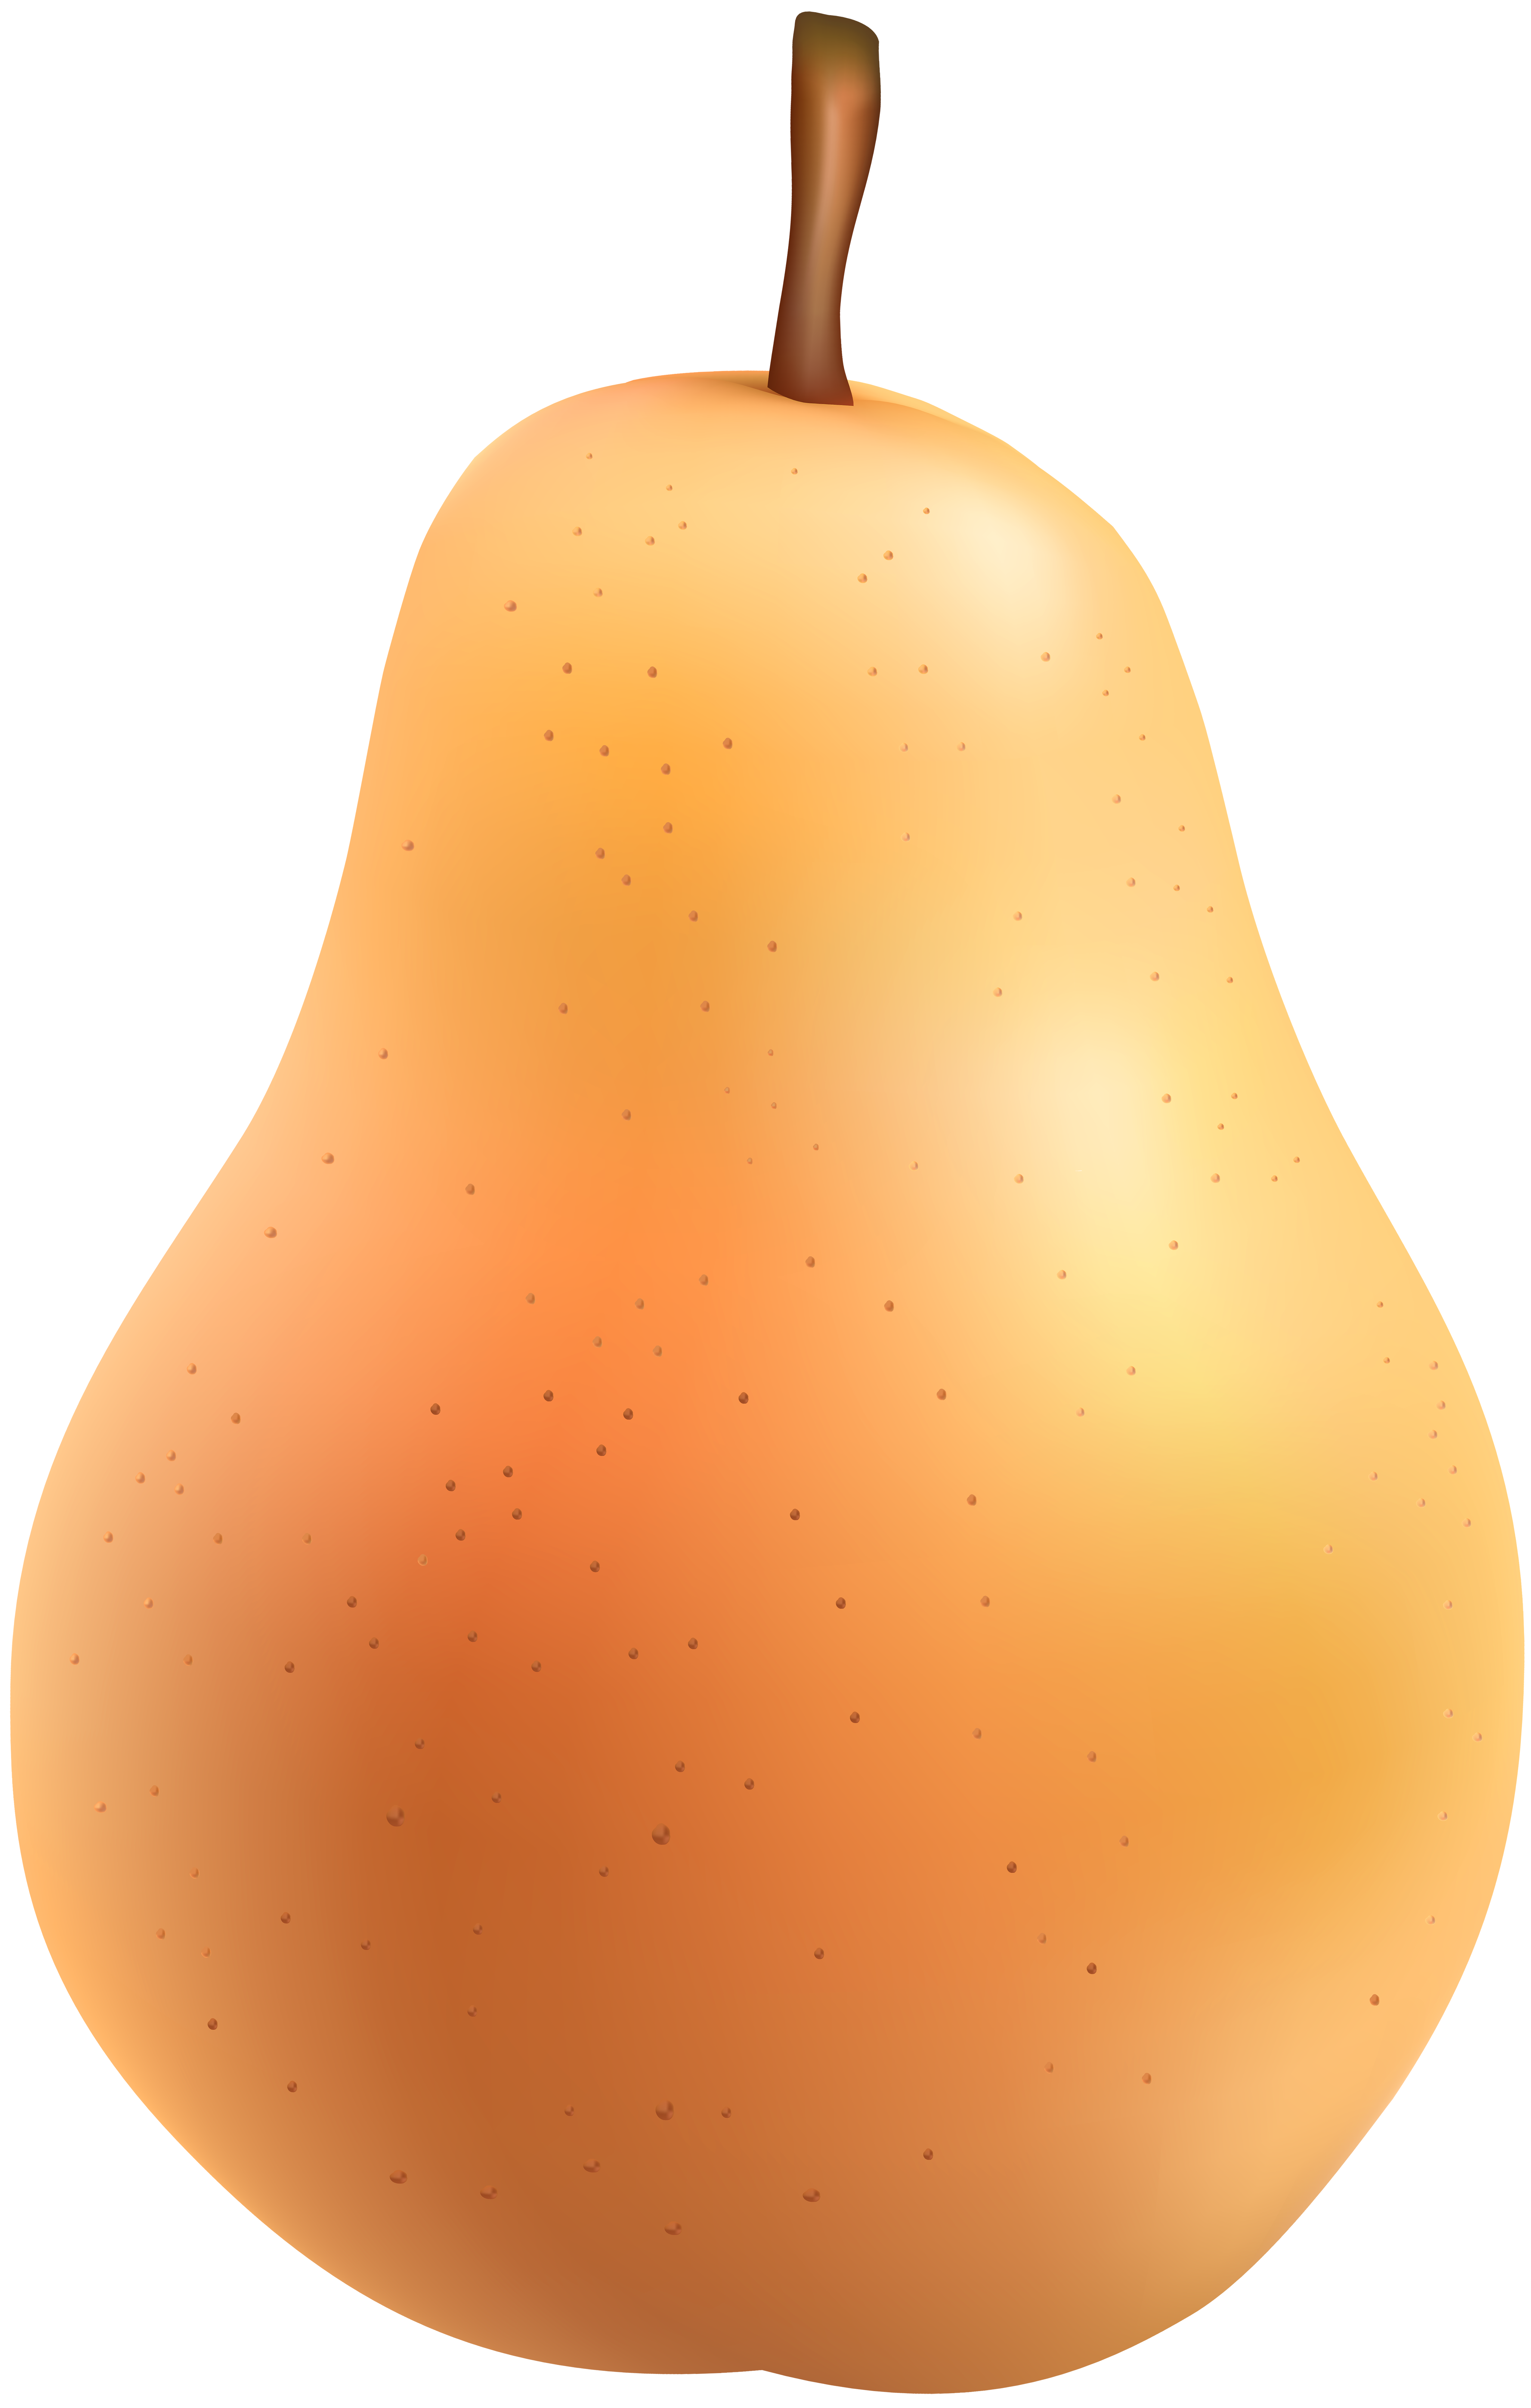 Orange pear. Груша. Оранжевая груша. Спелая груша. Груша на белом фоне.